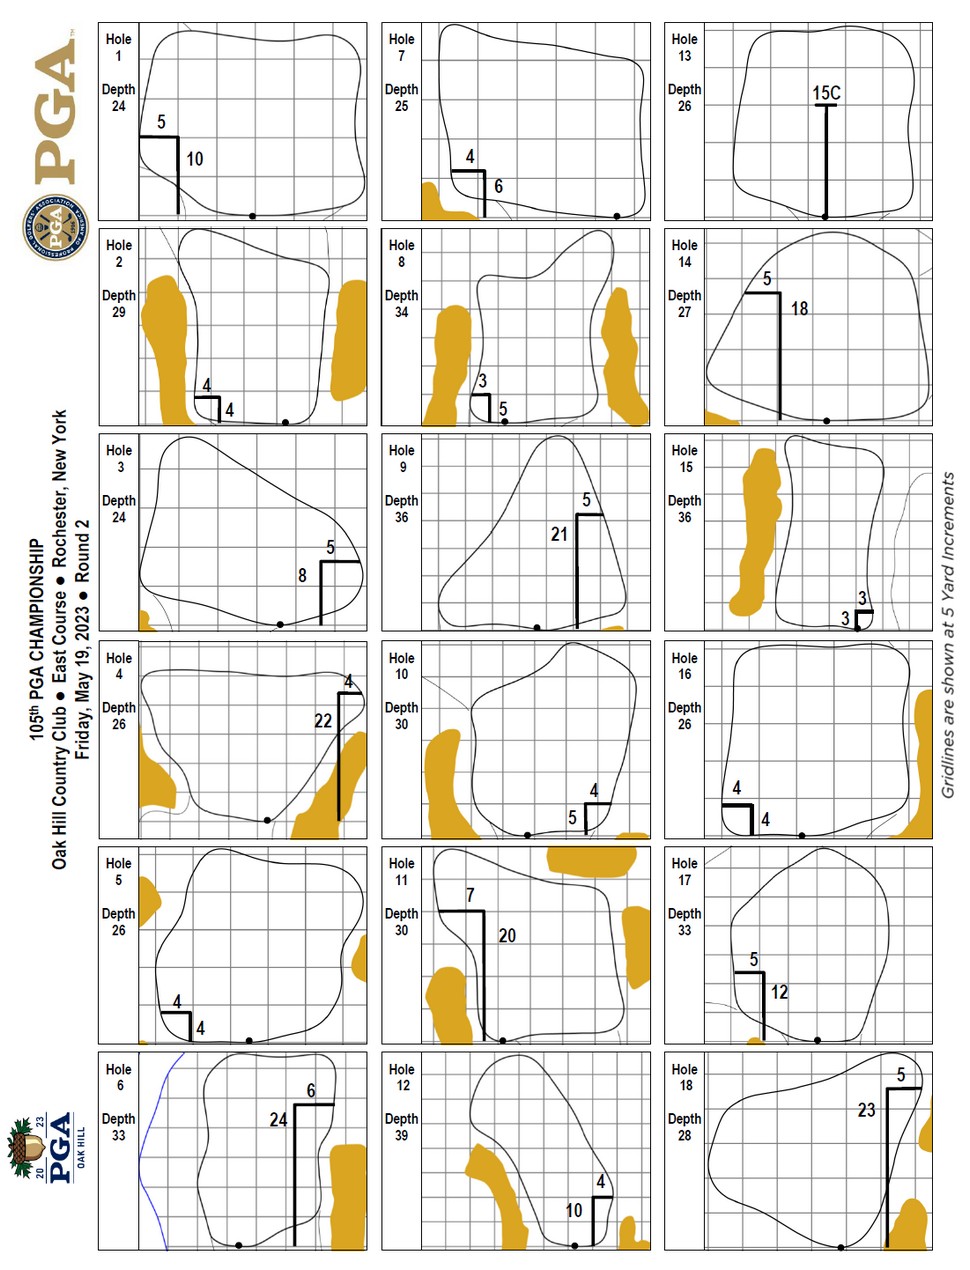 US PGA Championship pin locations - 2nd Round